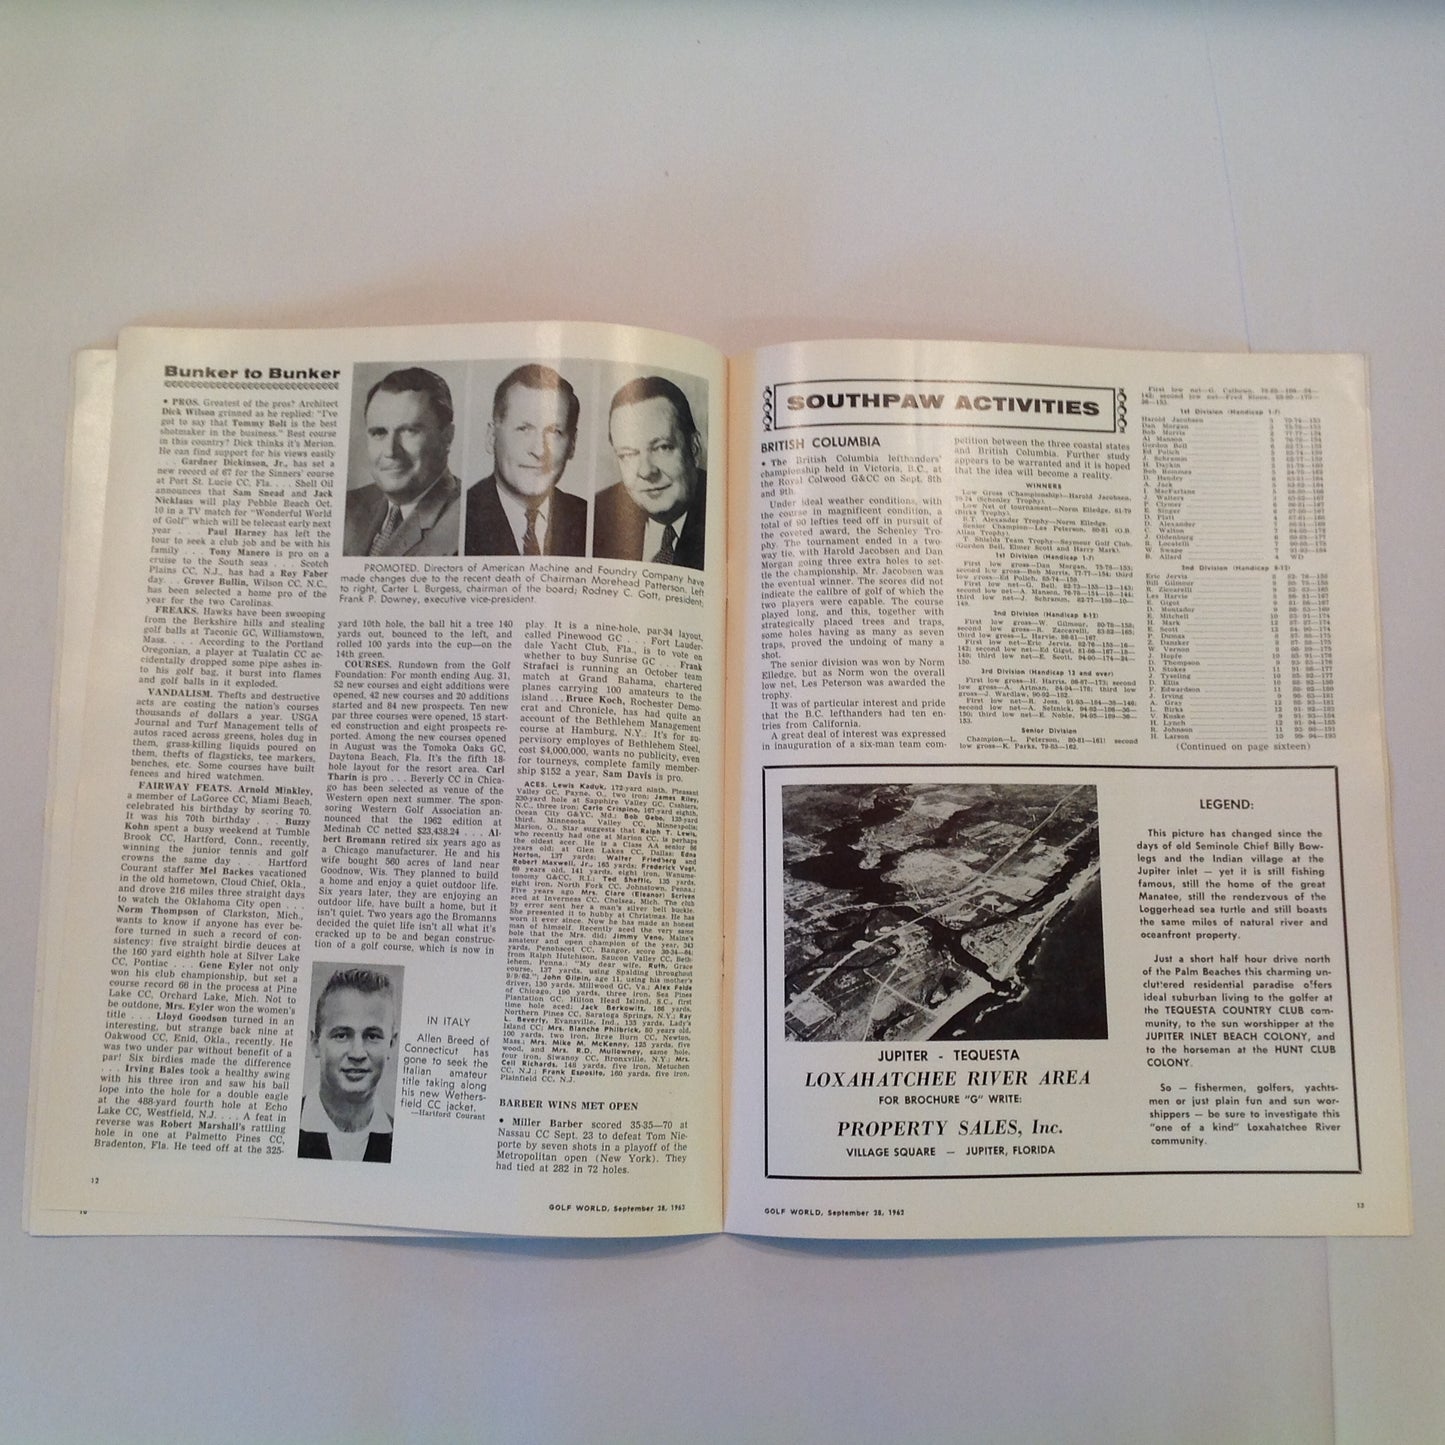 Vintage September 28 1962 GOLF WORLD Weekly Golf News Vol 16  No 18